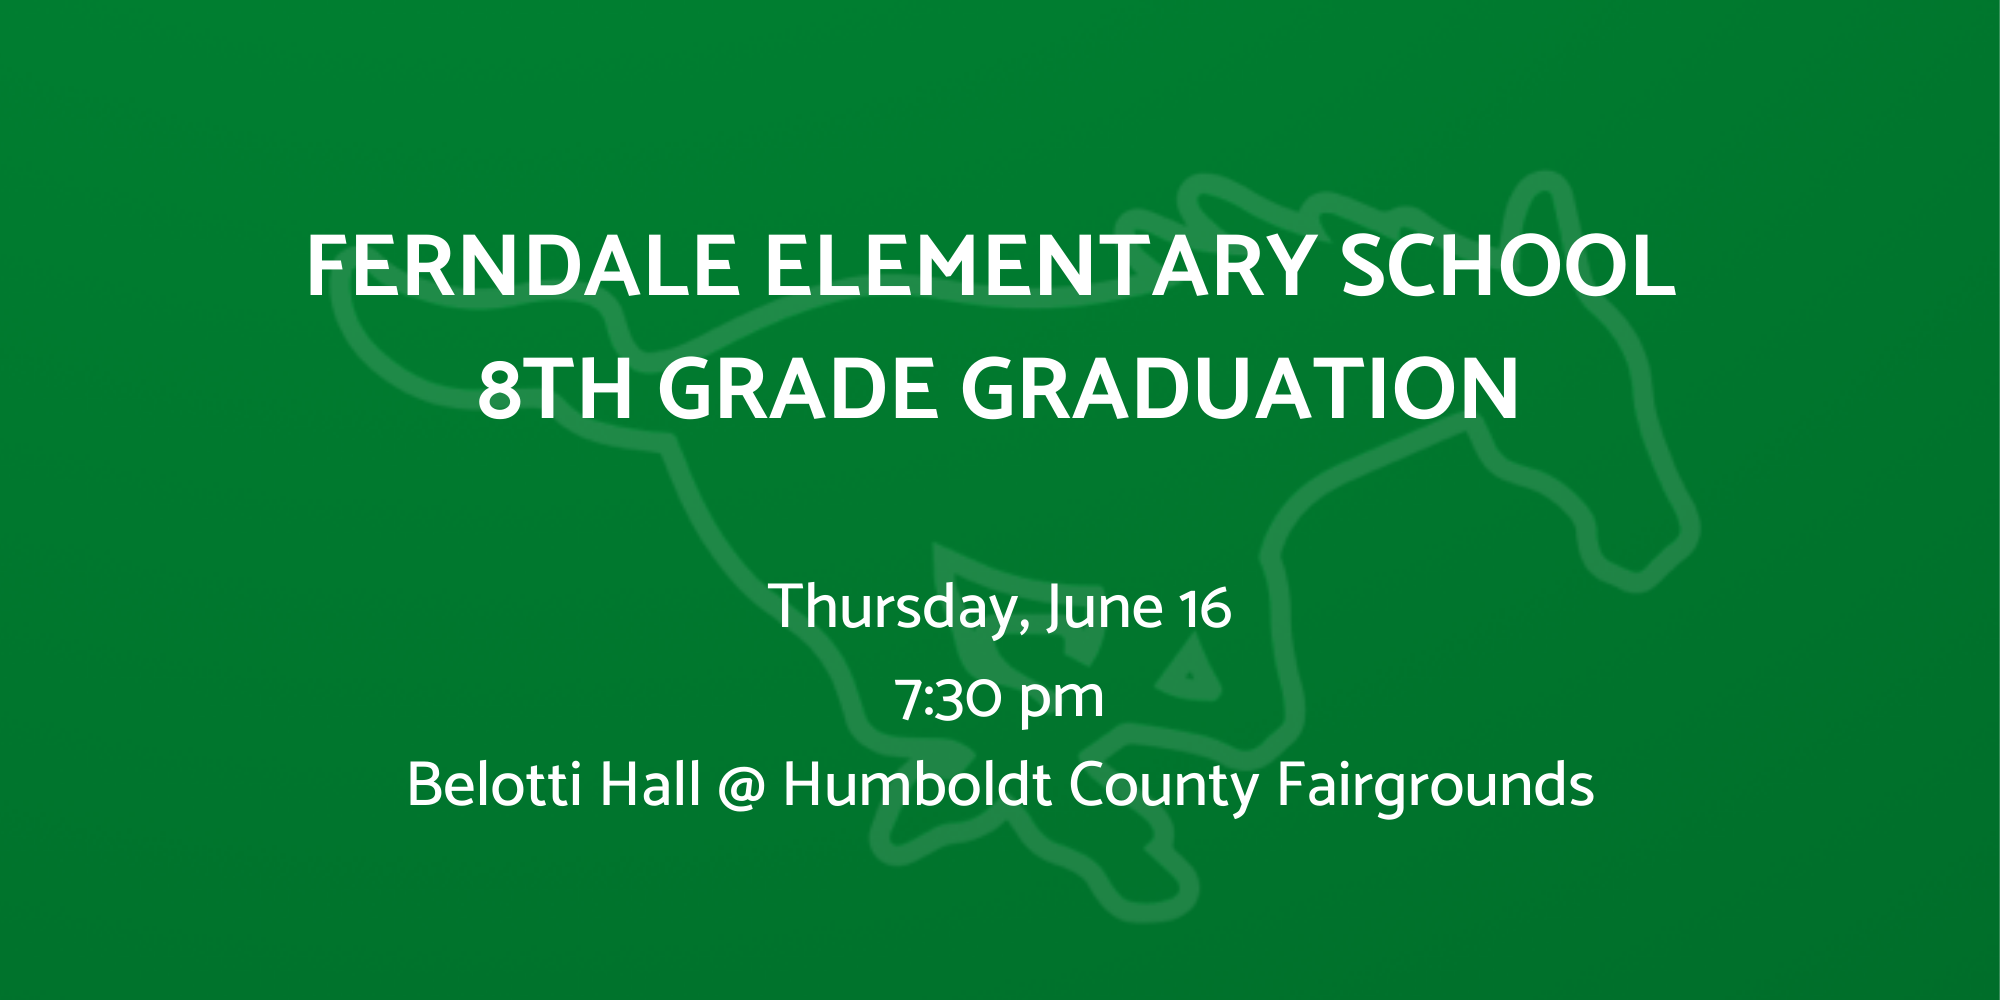 Ferndale Elementary Graduation, June 16, 7:30 pm, Belotti Hall @ the Fairgrounds